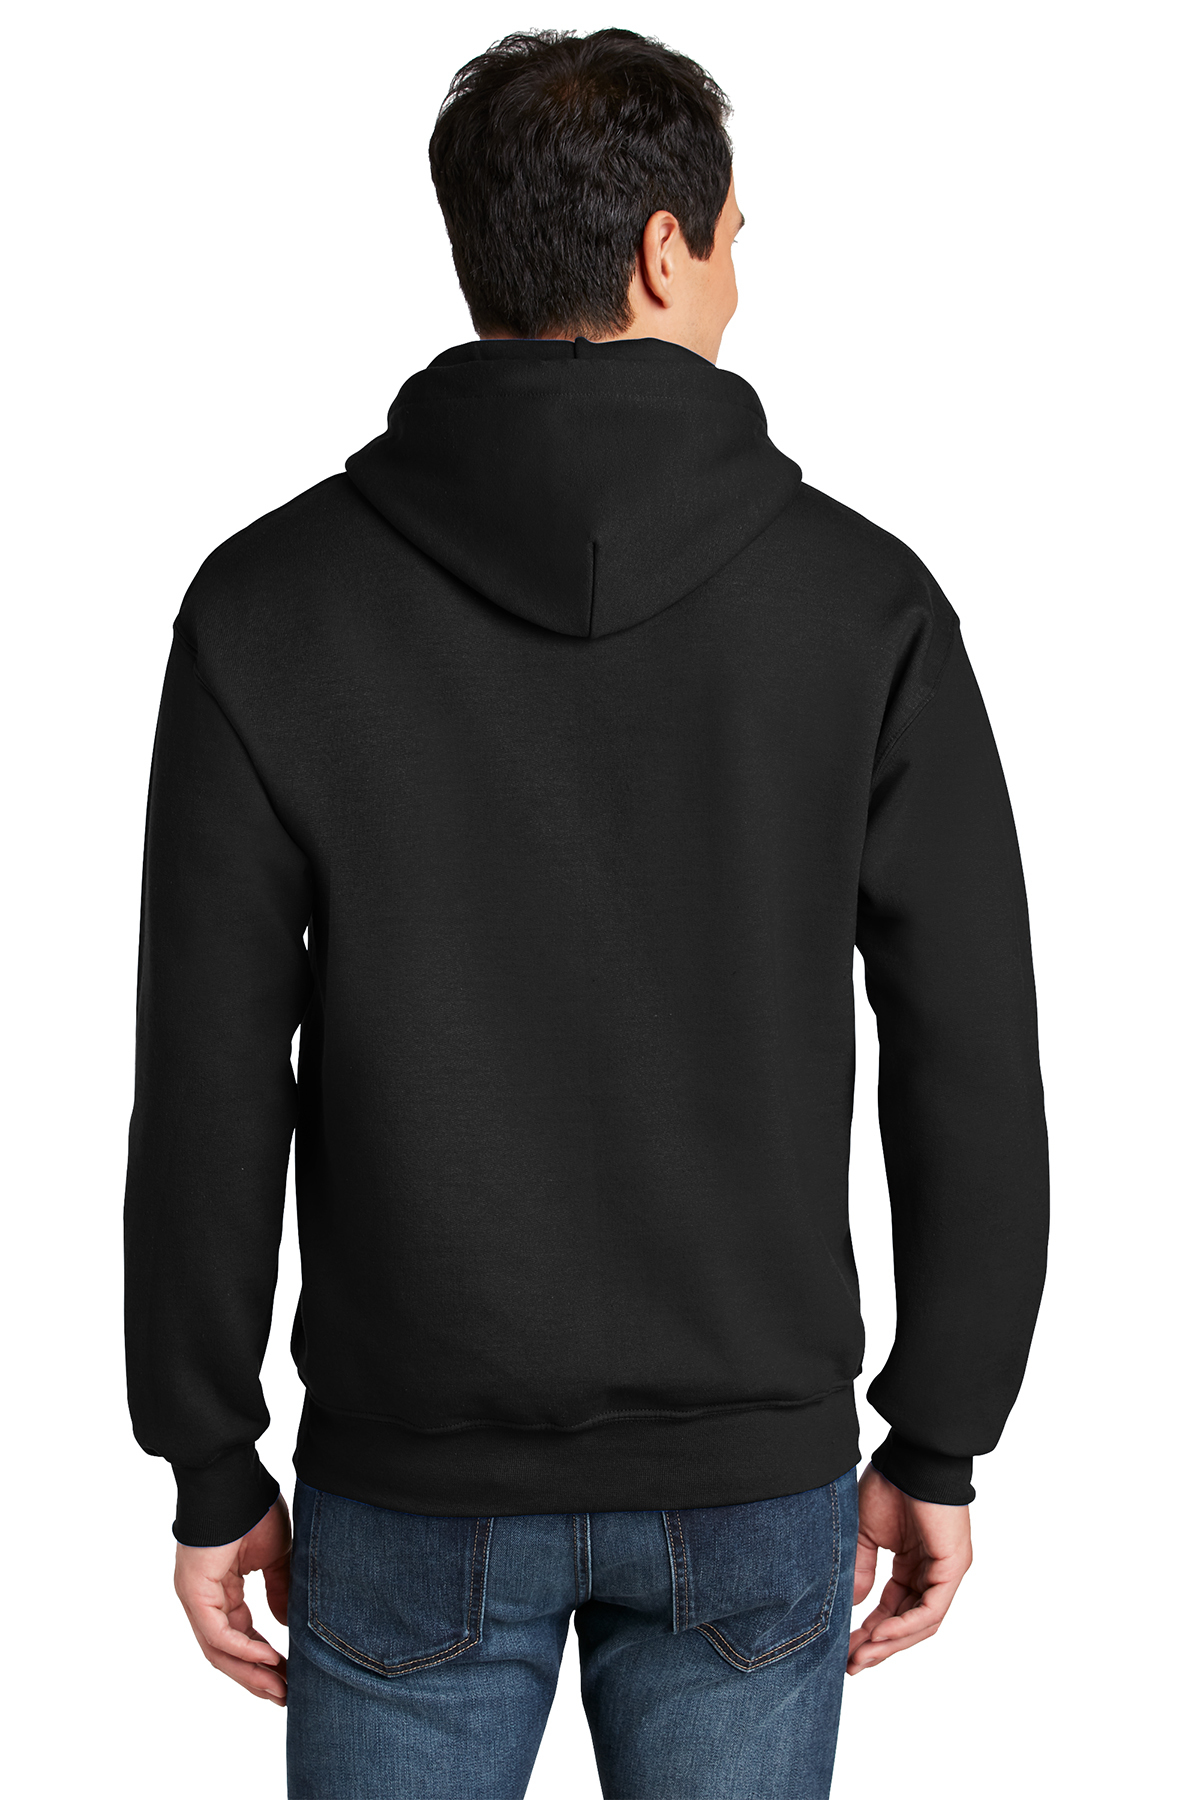 Gildan - DryBlend Pullover Hooded Sweatshirt | Product | Company Casuals